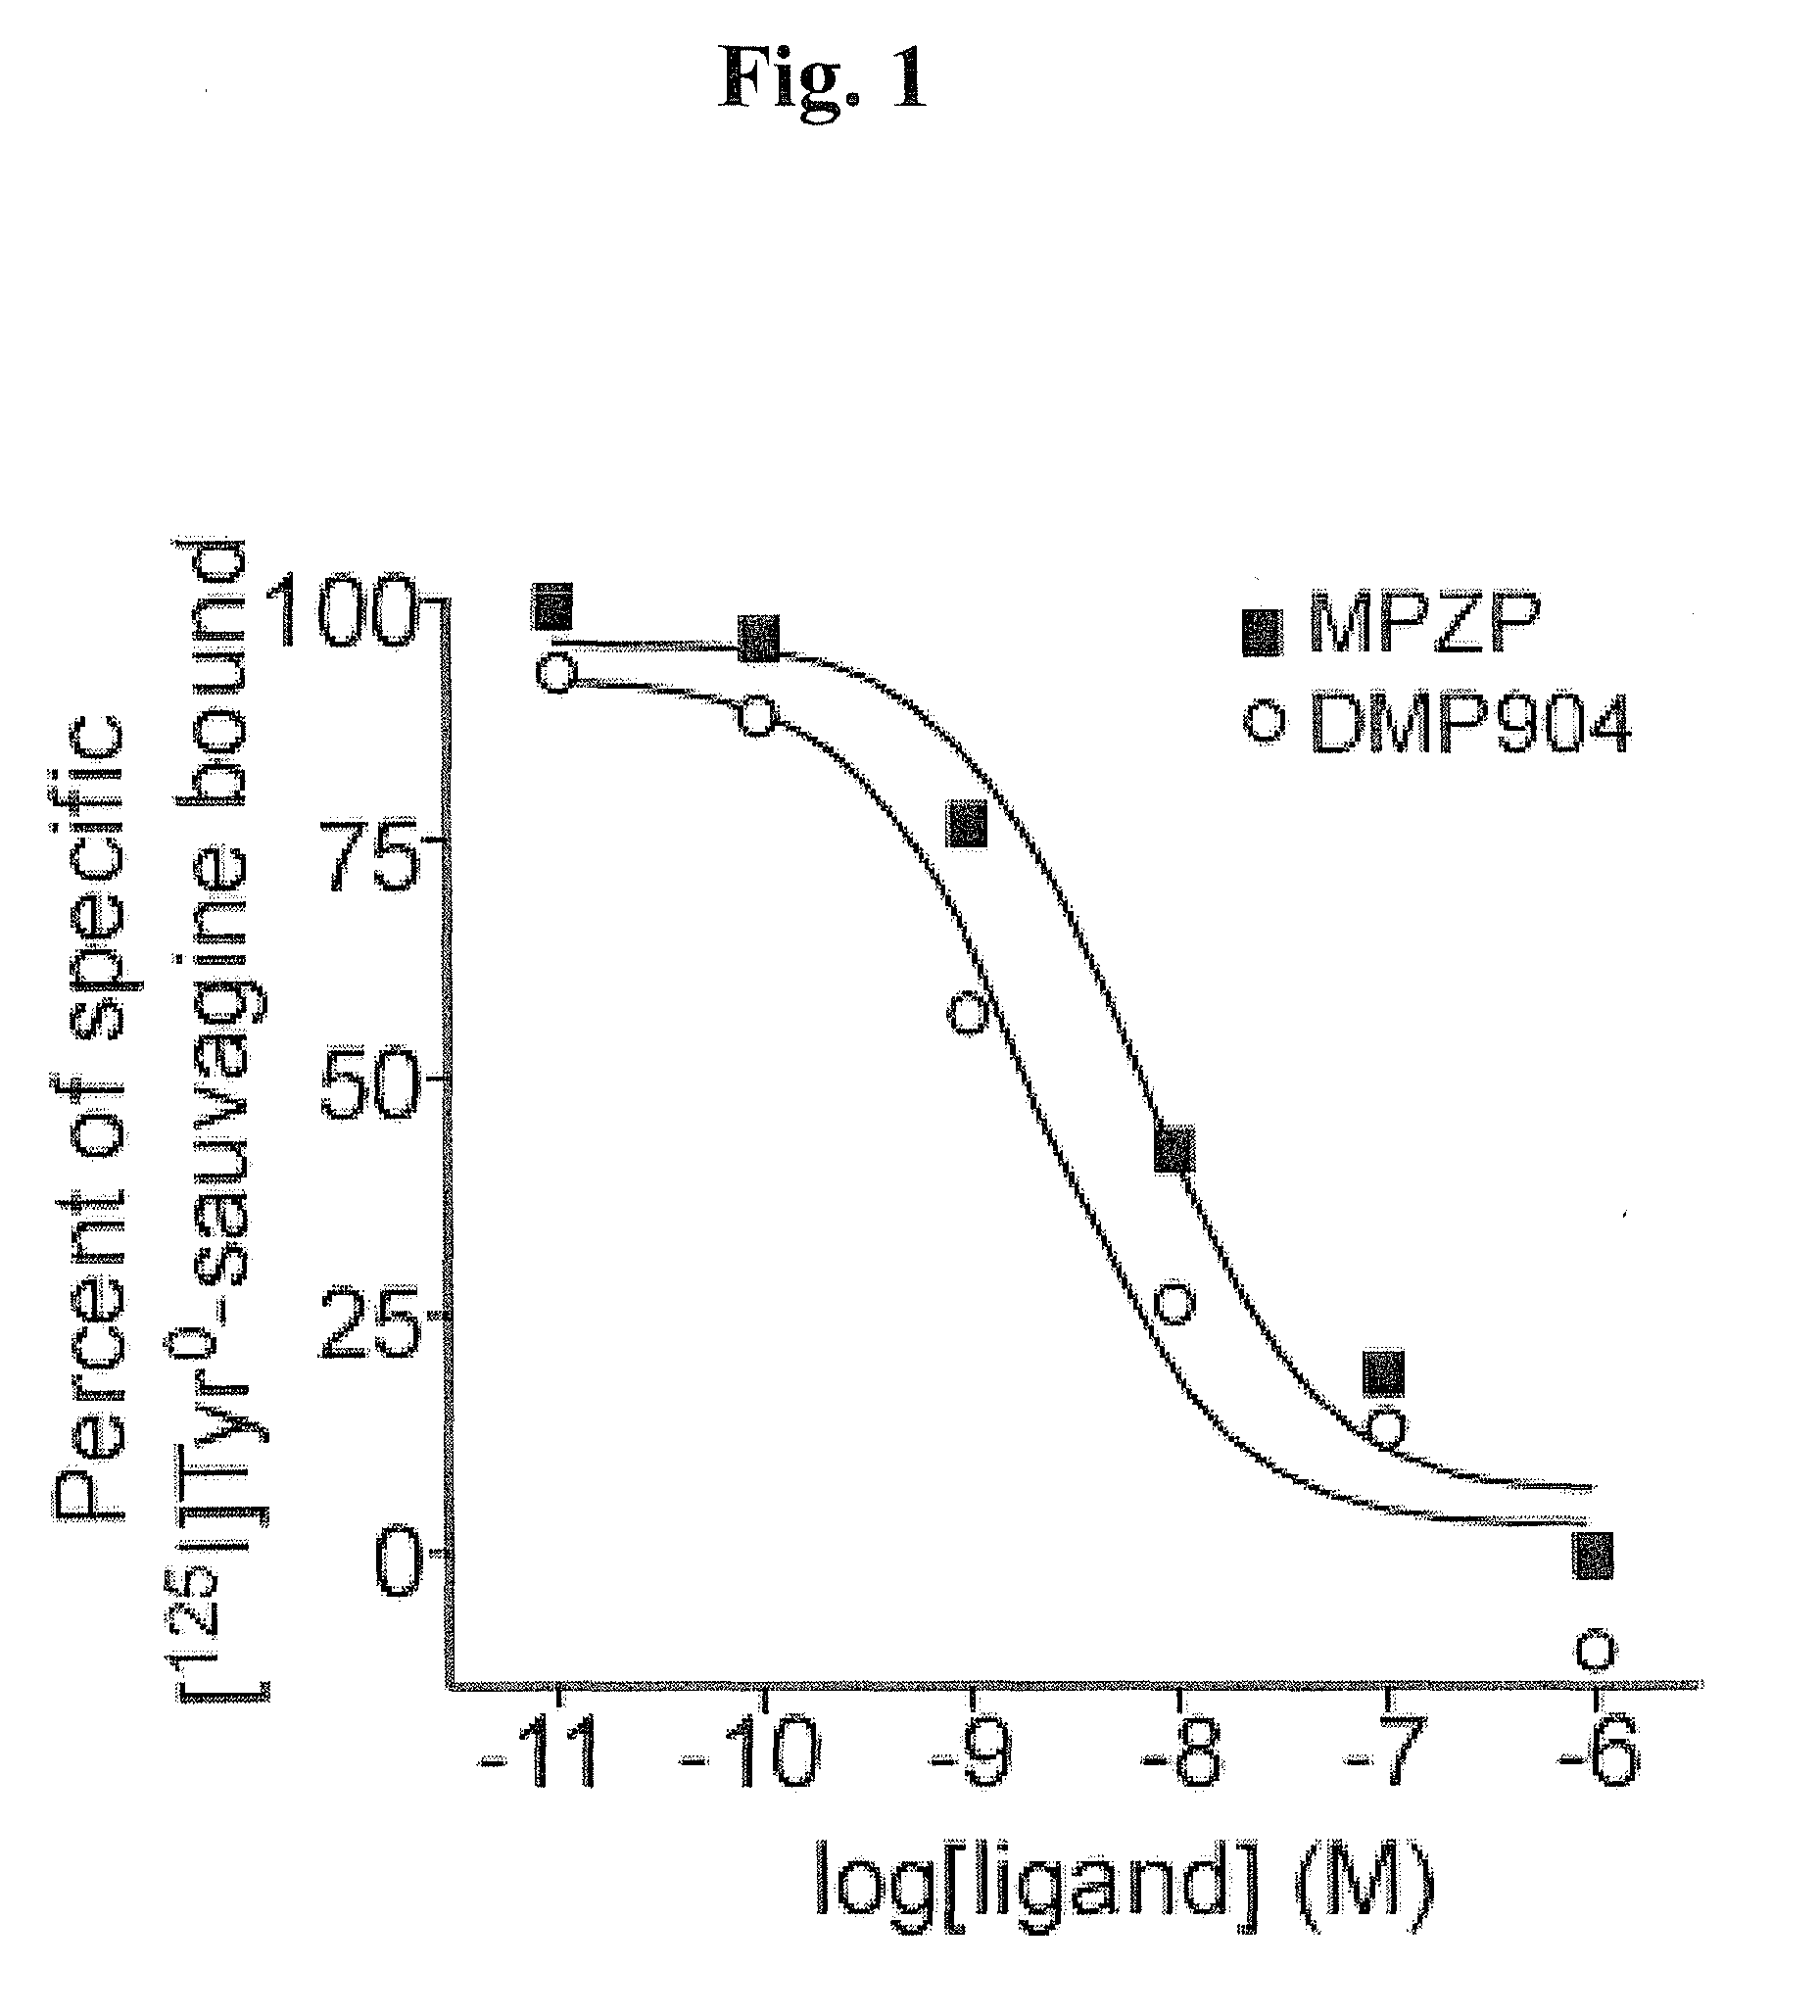 Mpzp: a small molecule corticotropin-releasing factor type 1 receptor (CRF1) antogonist